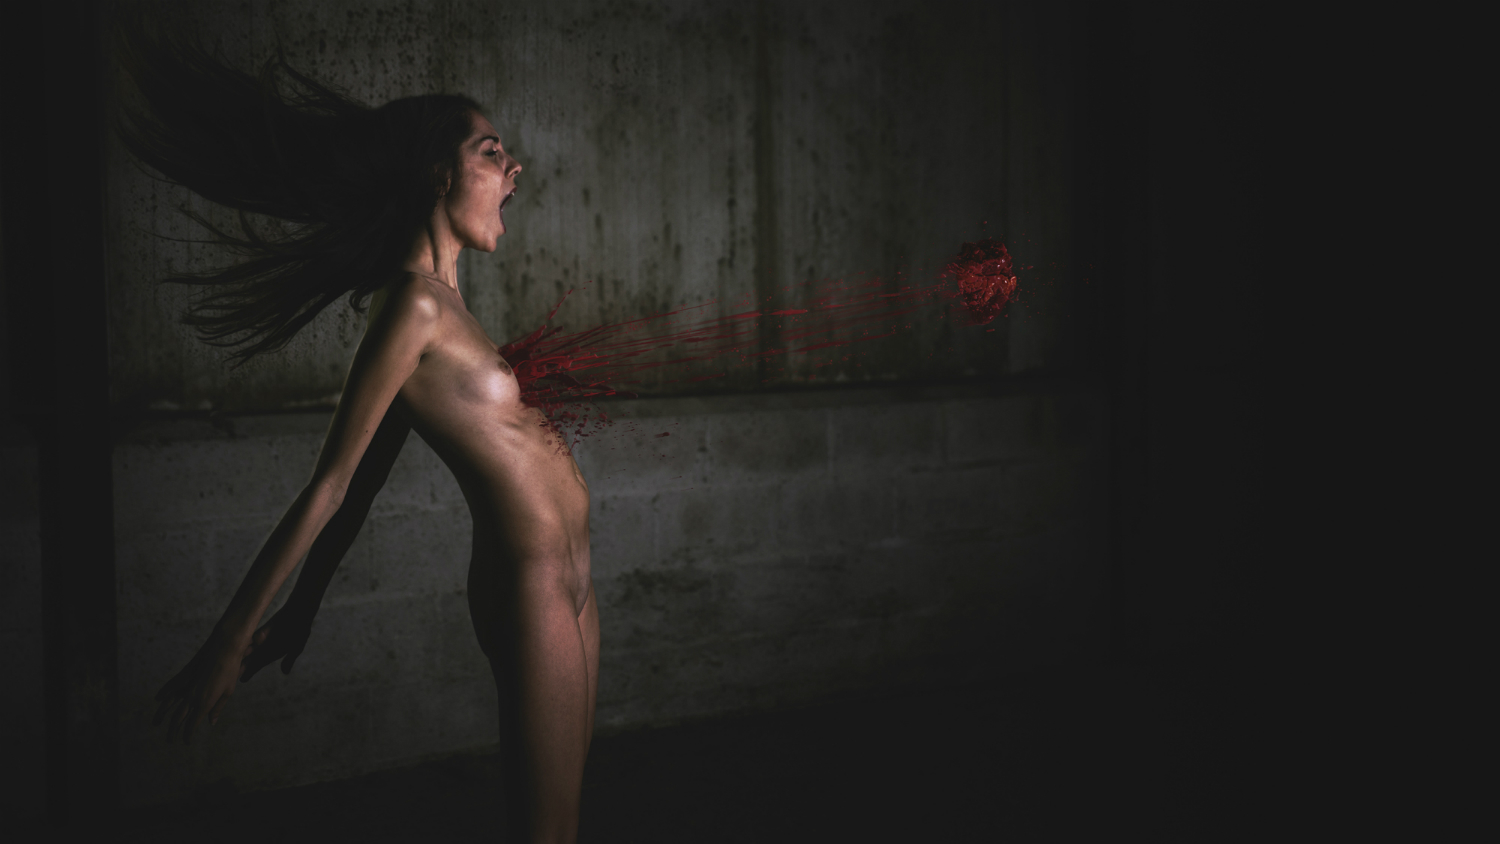 Naked Horror Sluts - Naked girl horror movies Â" Hot Nude Girls. 